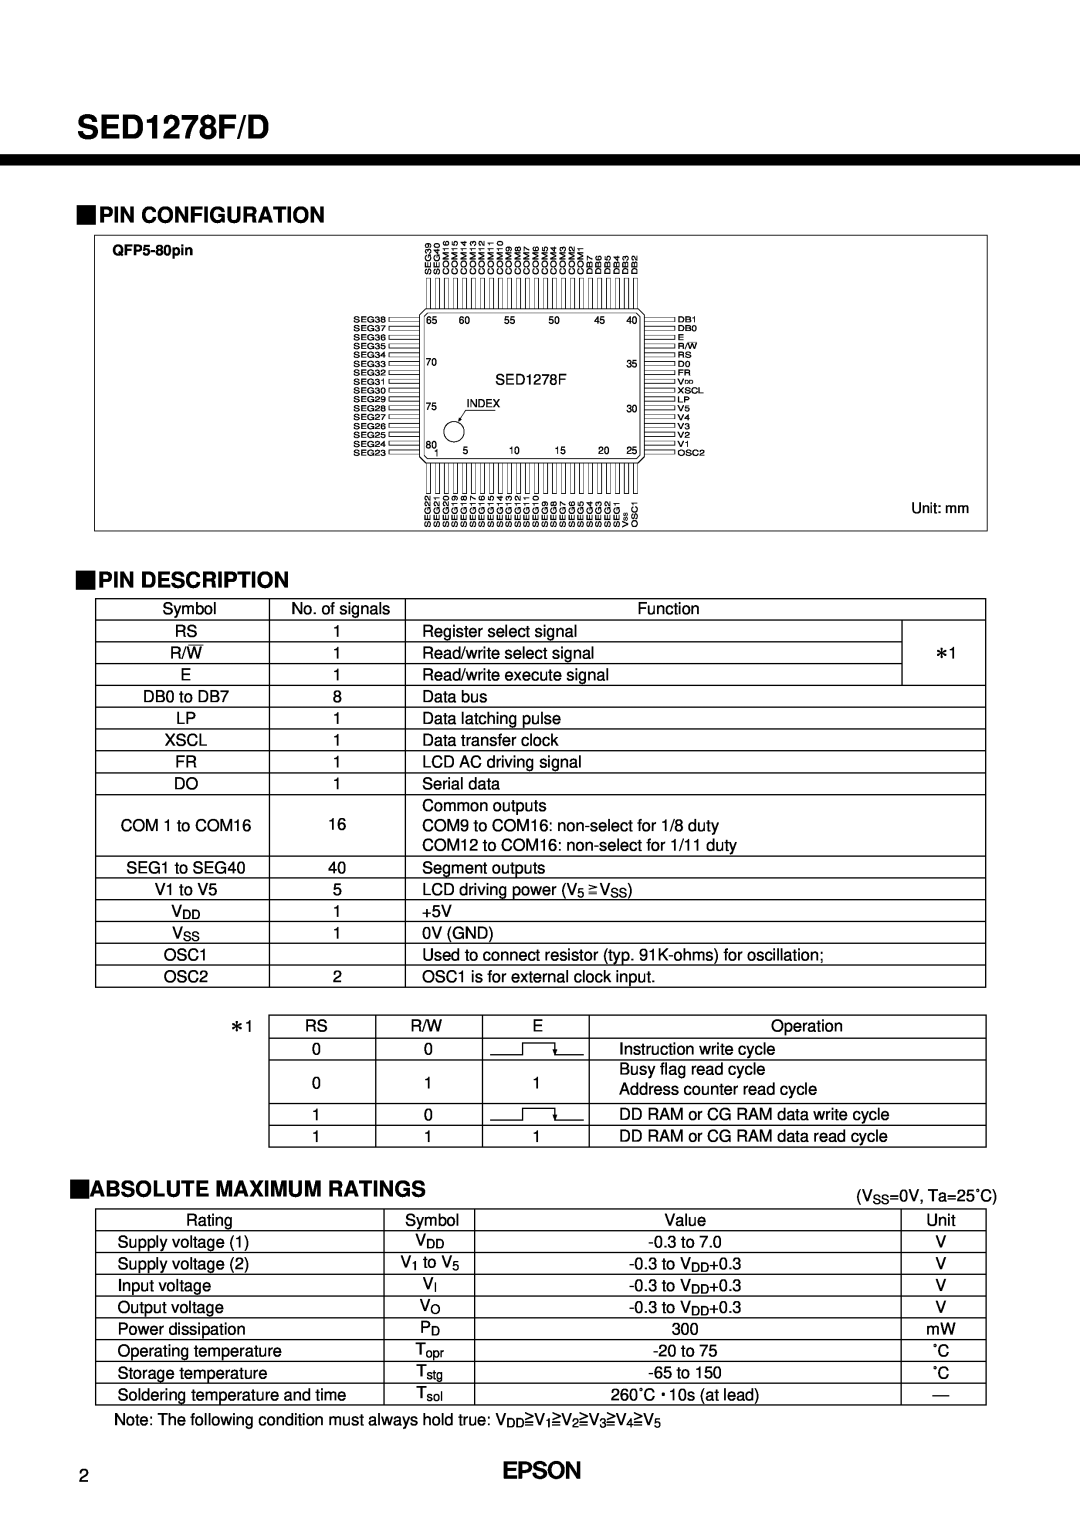 Epson SED1278F/D manual Pin Configuration, Pin Description, Absolute Maximum Ratings 